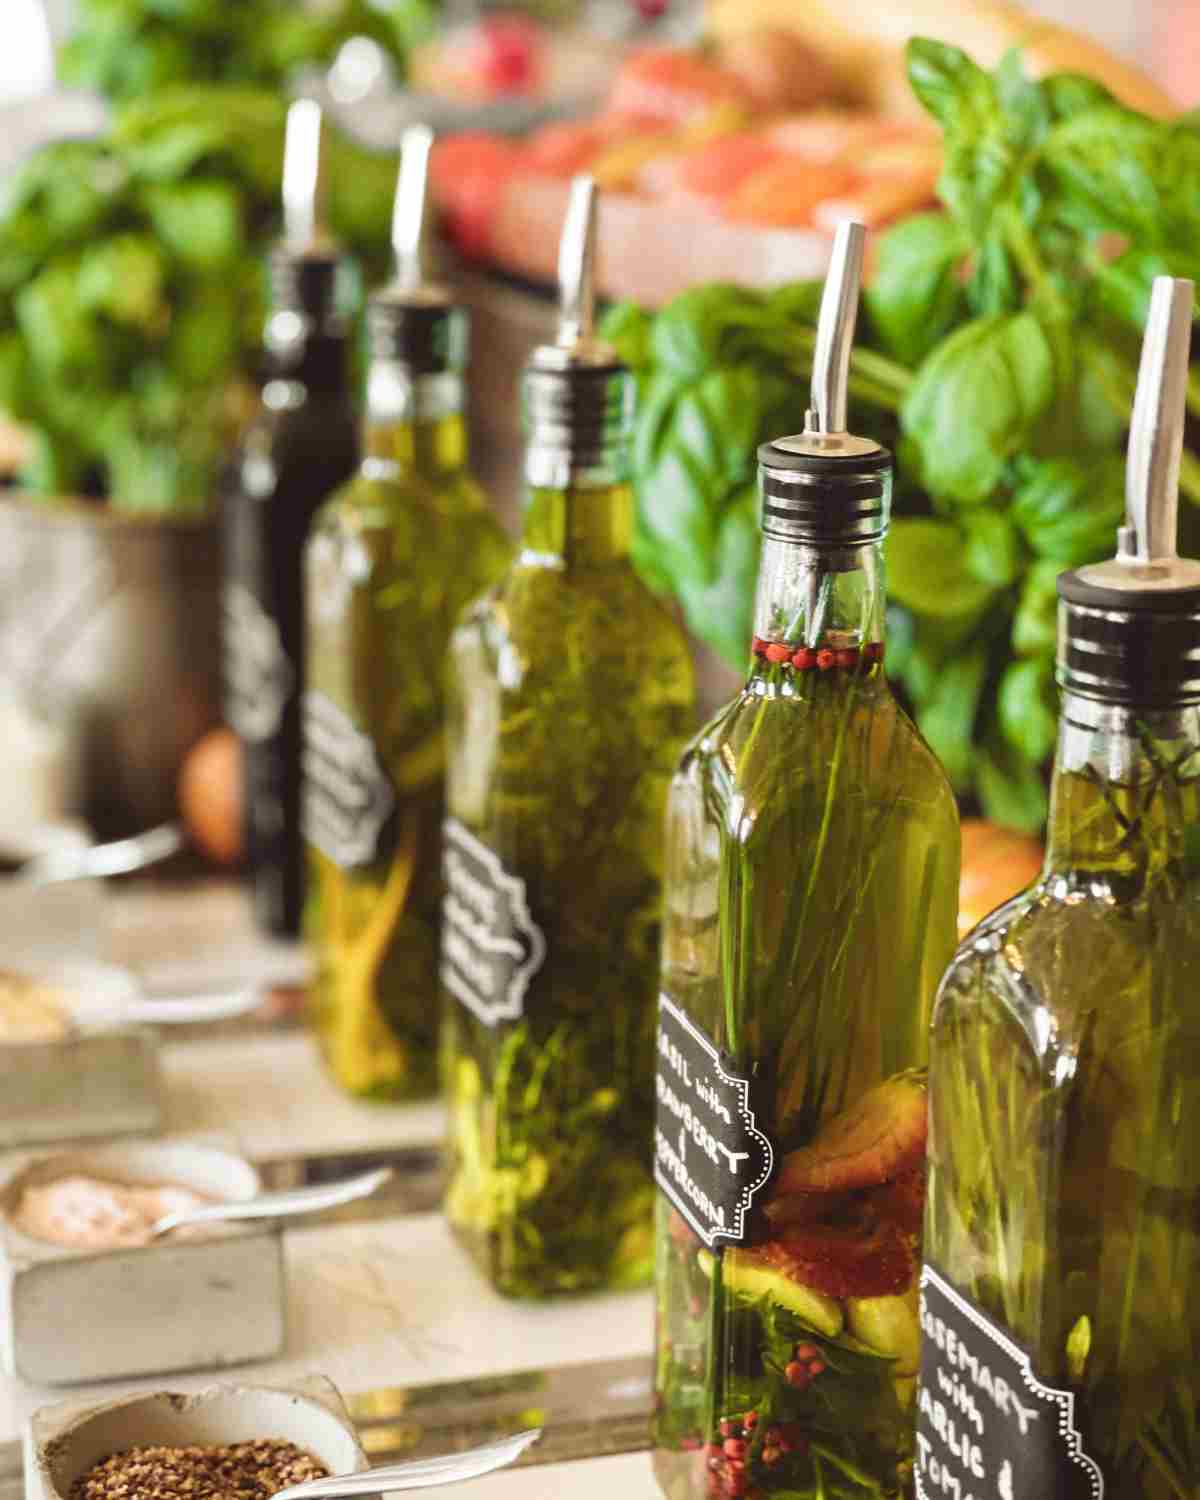 vegan oils in bottles infused with herbs.